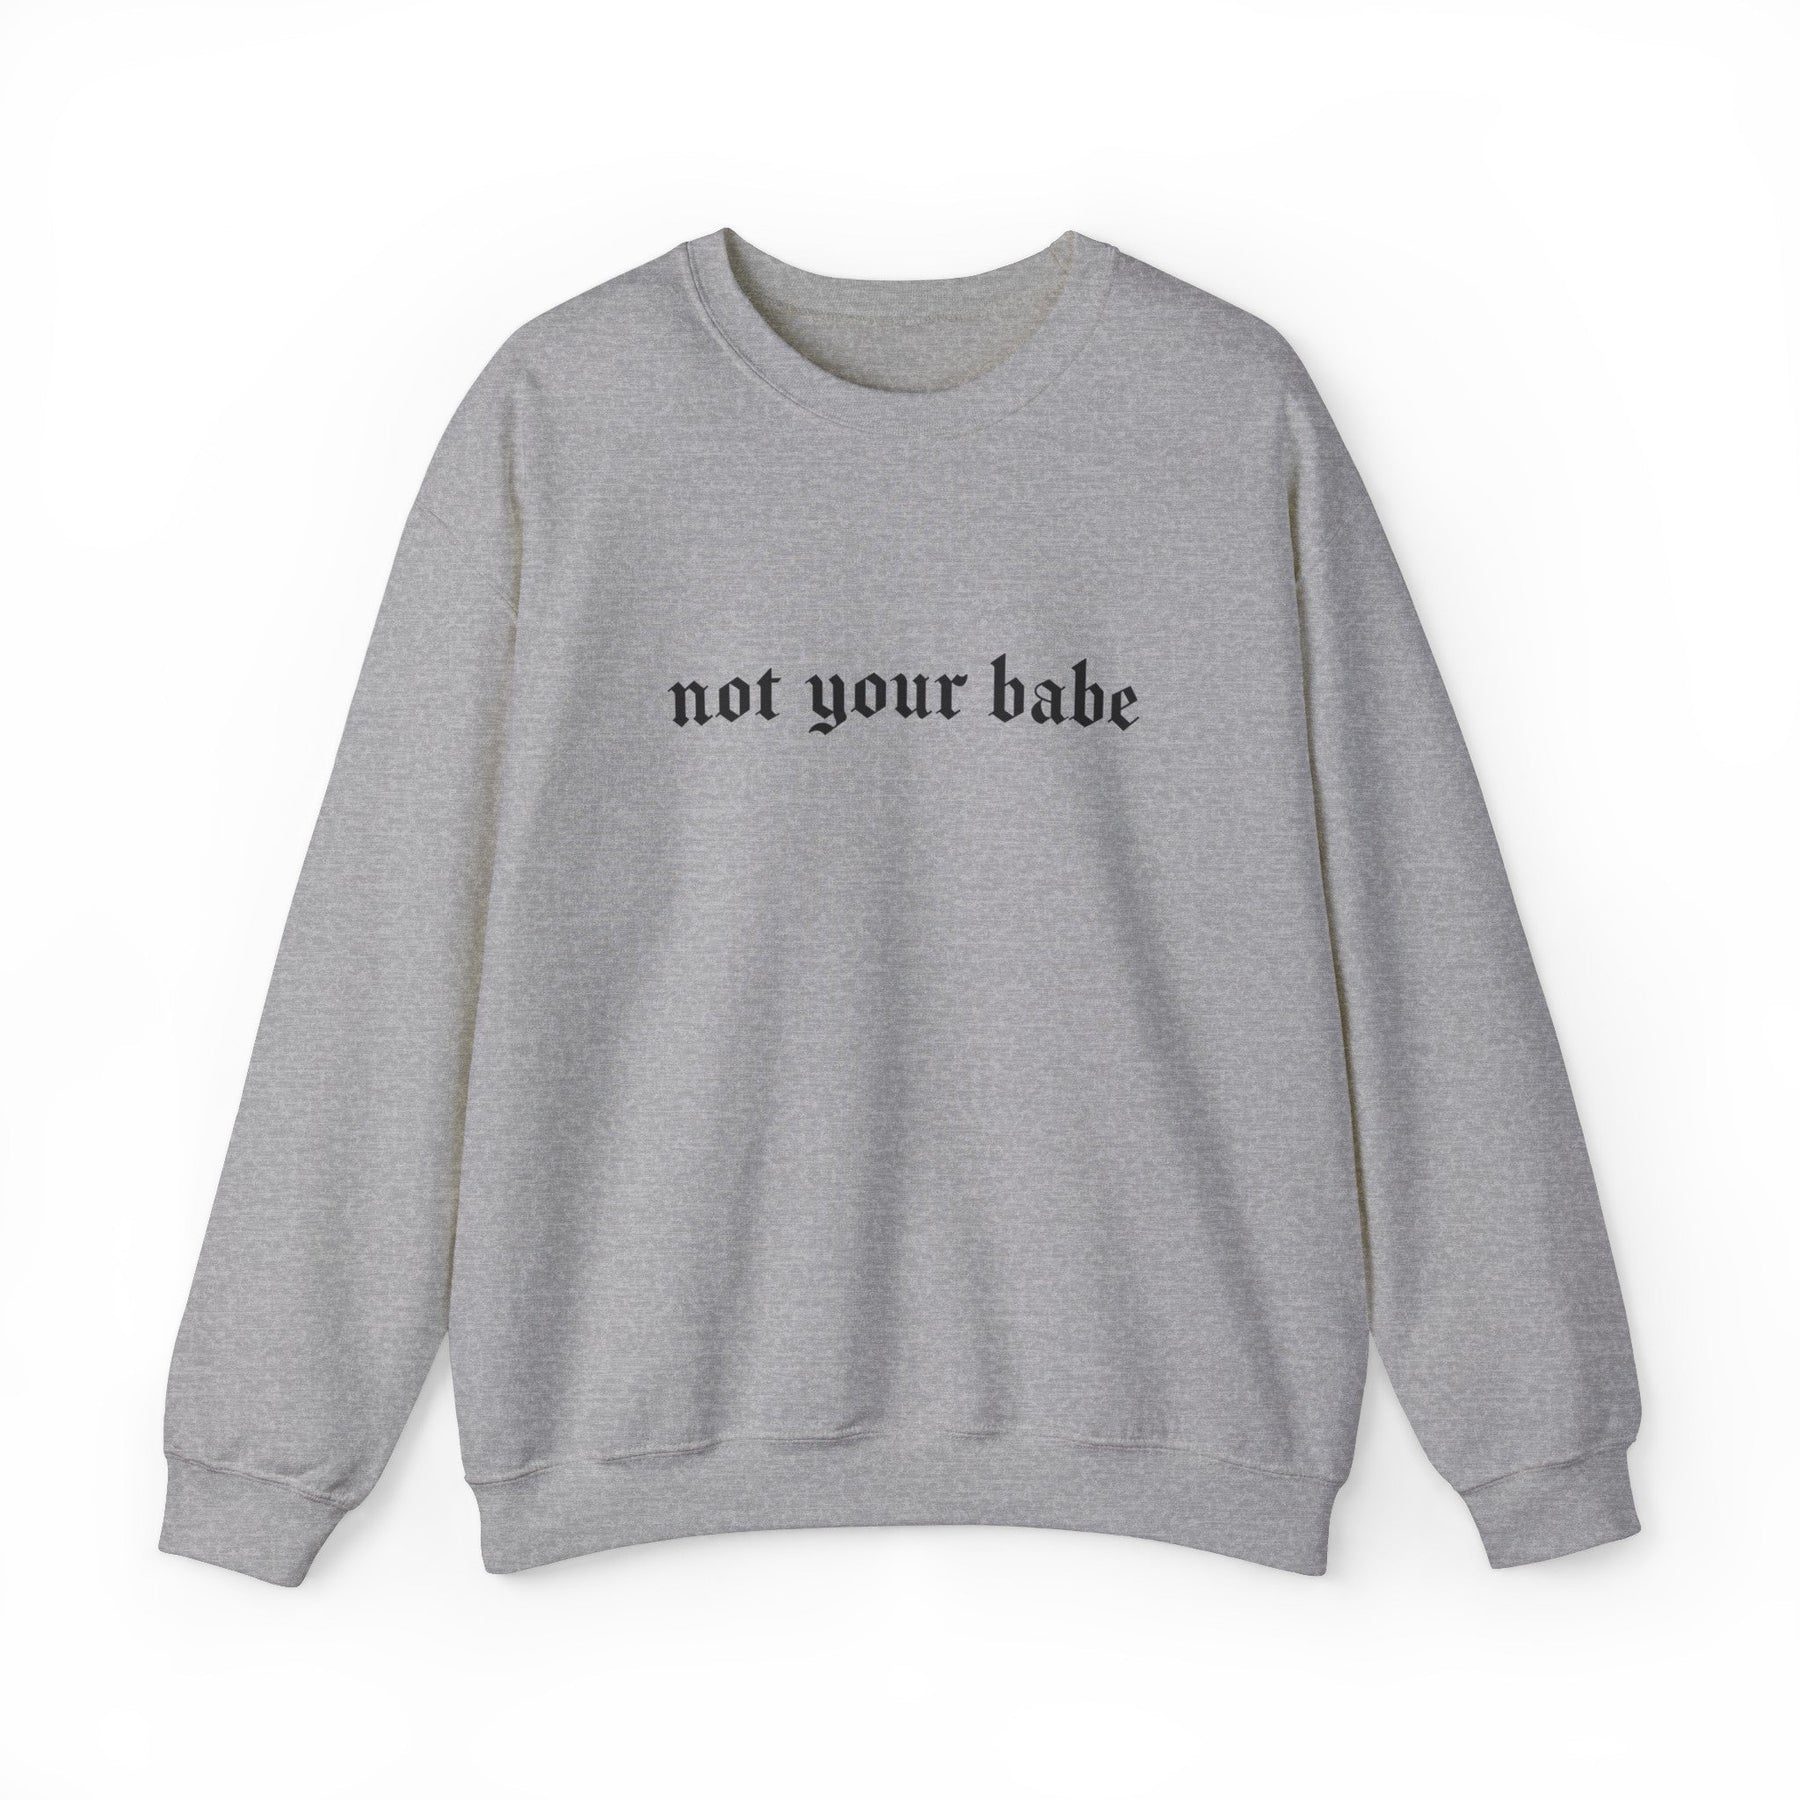 Not Your Babe Classic Goth Crew Neck Sweatshirt - Goth Cloth Co.Sweatshirt19152427764318425685